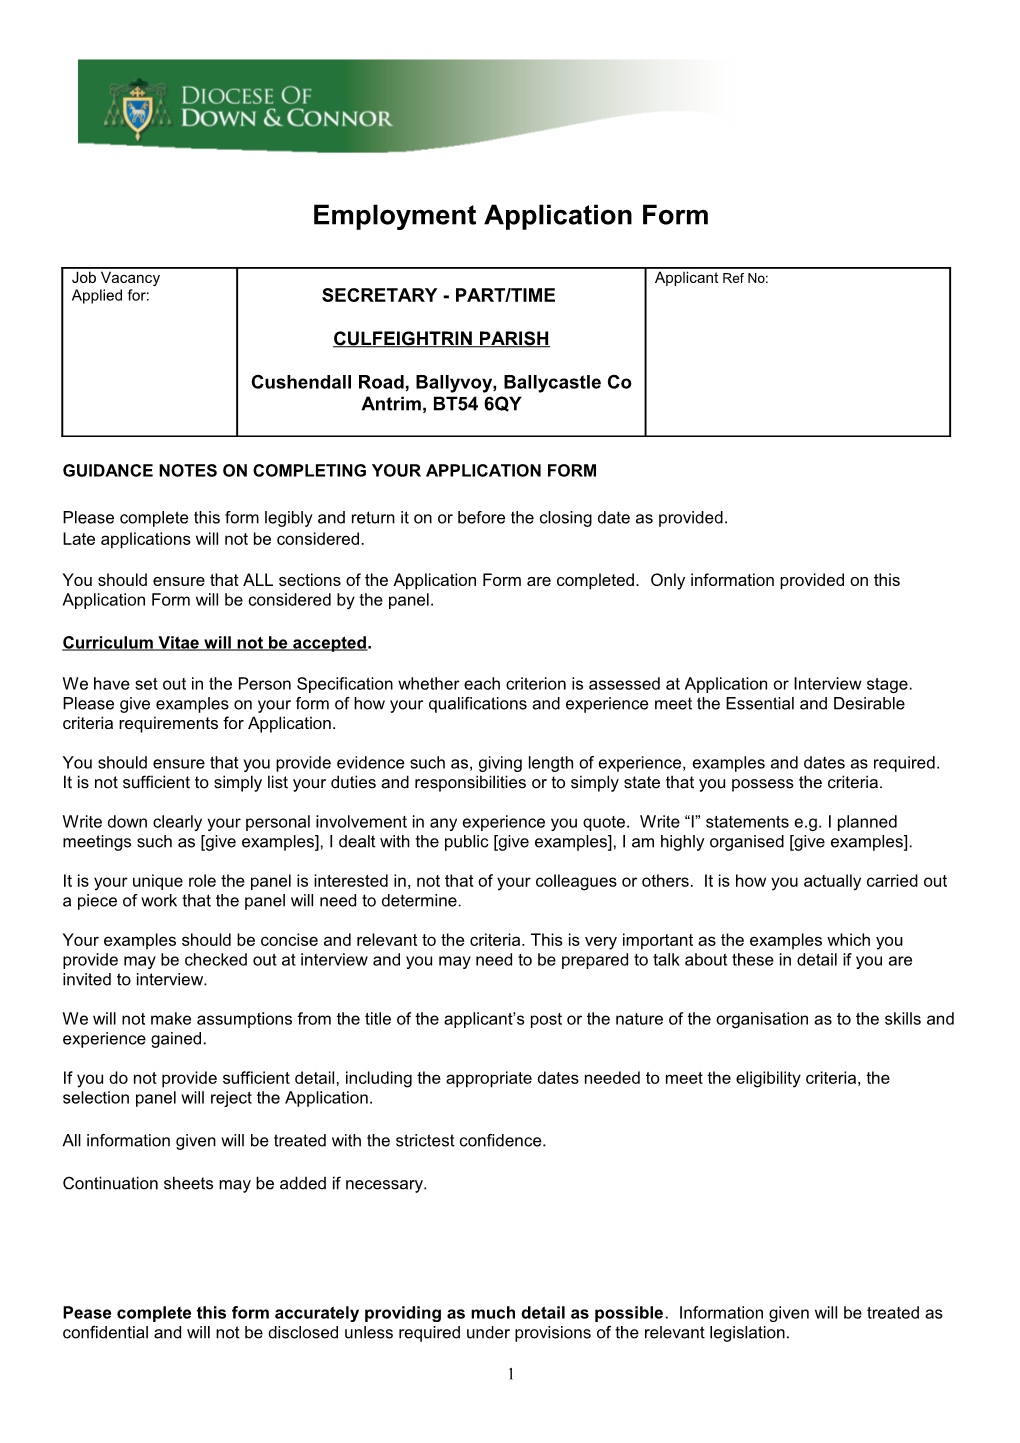 Application Form for Job Vacancy